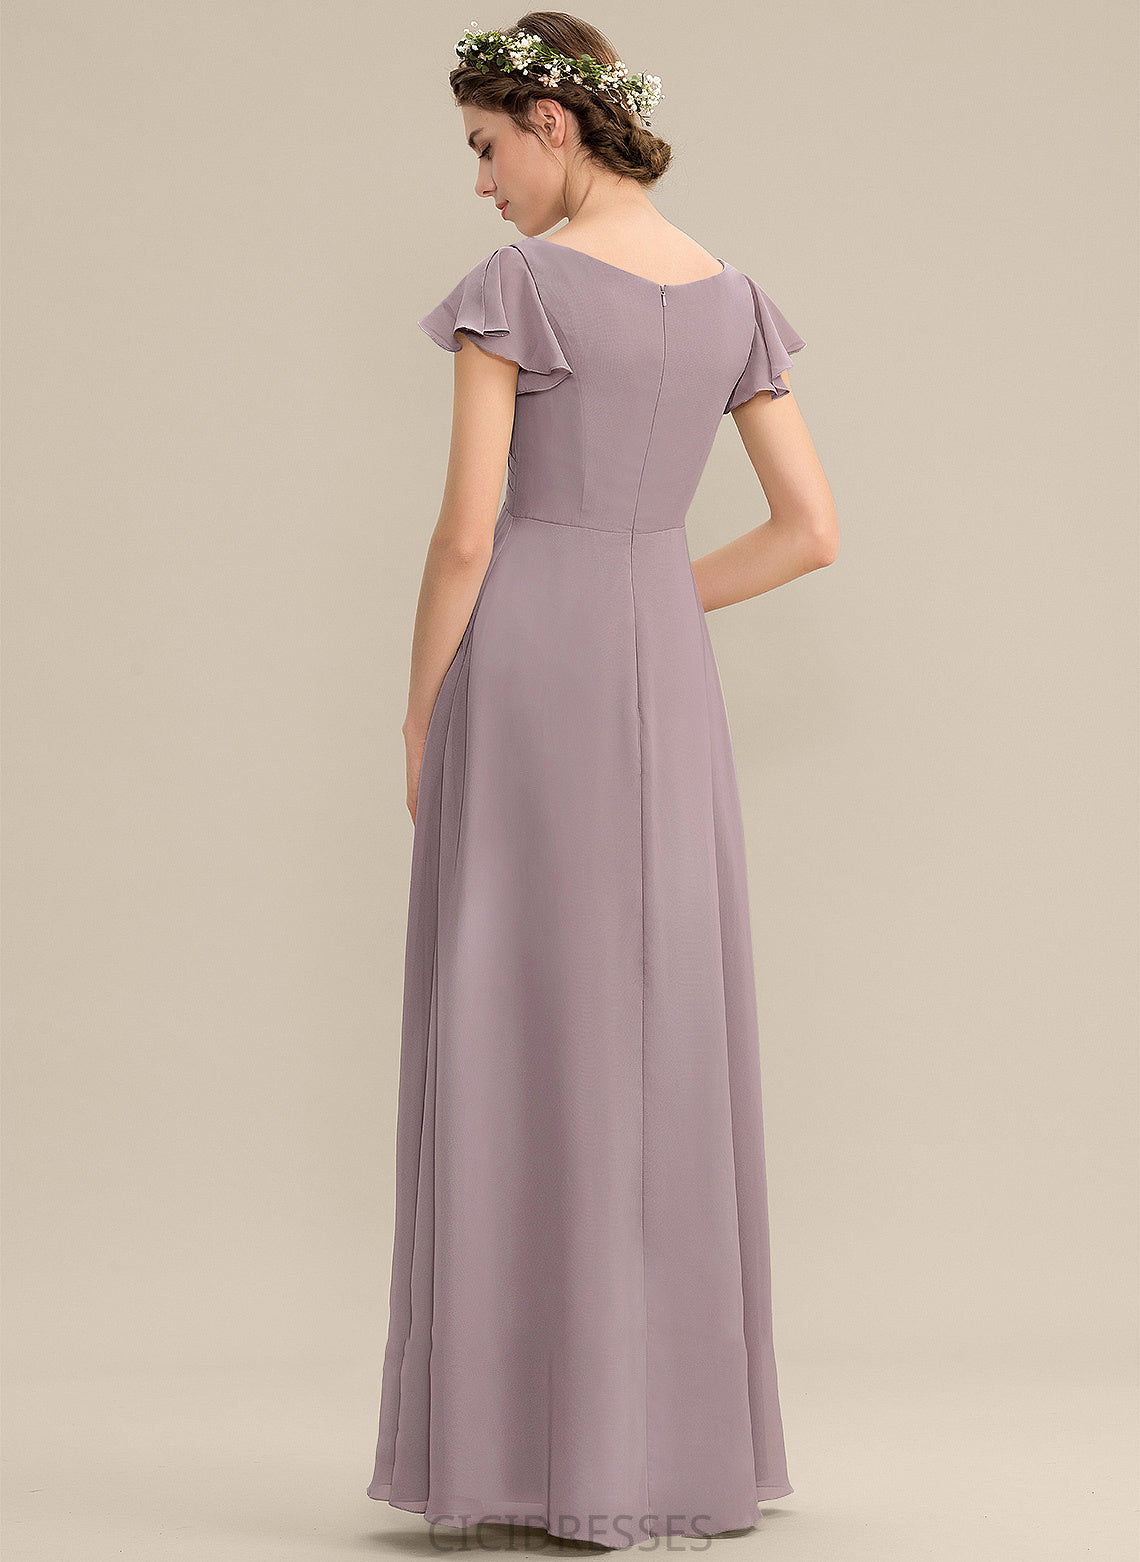 Embellishment Fabric Silhouette Pockets Floor-Length Length CascadingRuffles A-Line V-neck Neckline Chelsea Sleeveless Bridesmaid Dresses